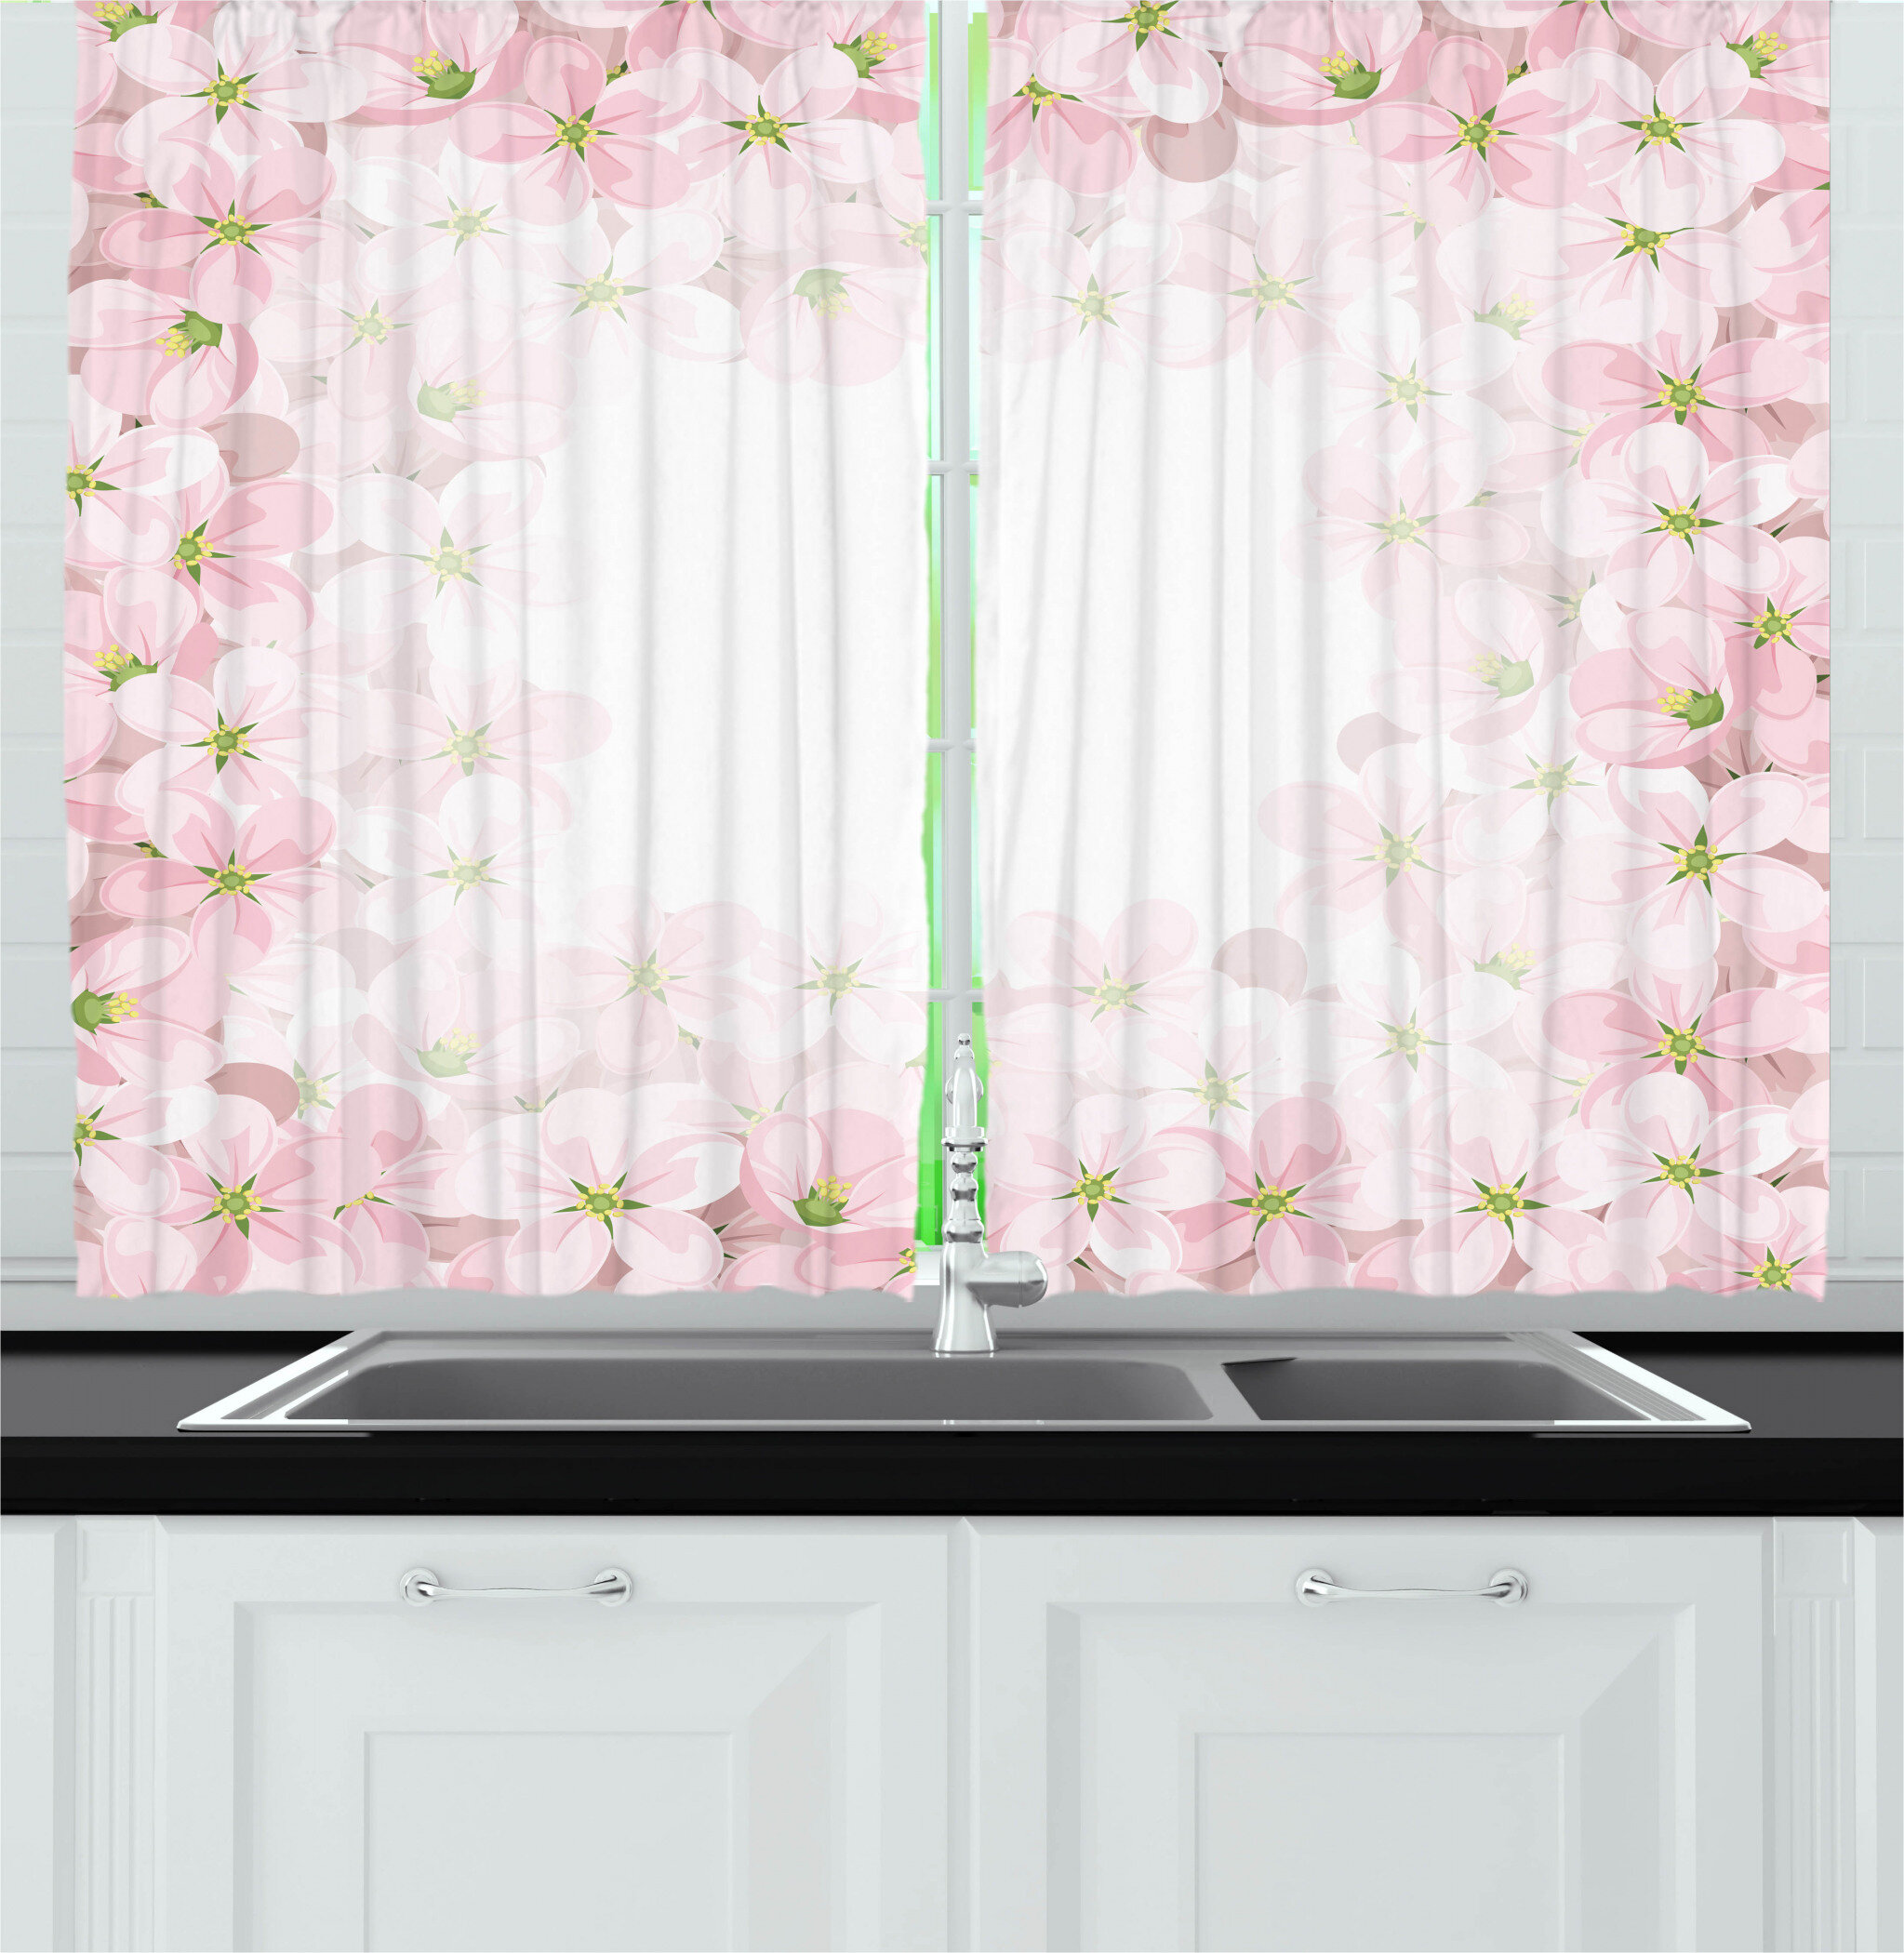 East Urban Home Floral 2 Piece Kitchen Curtain Wayfair